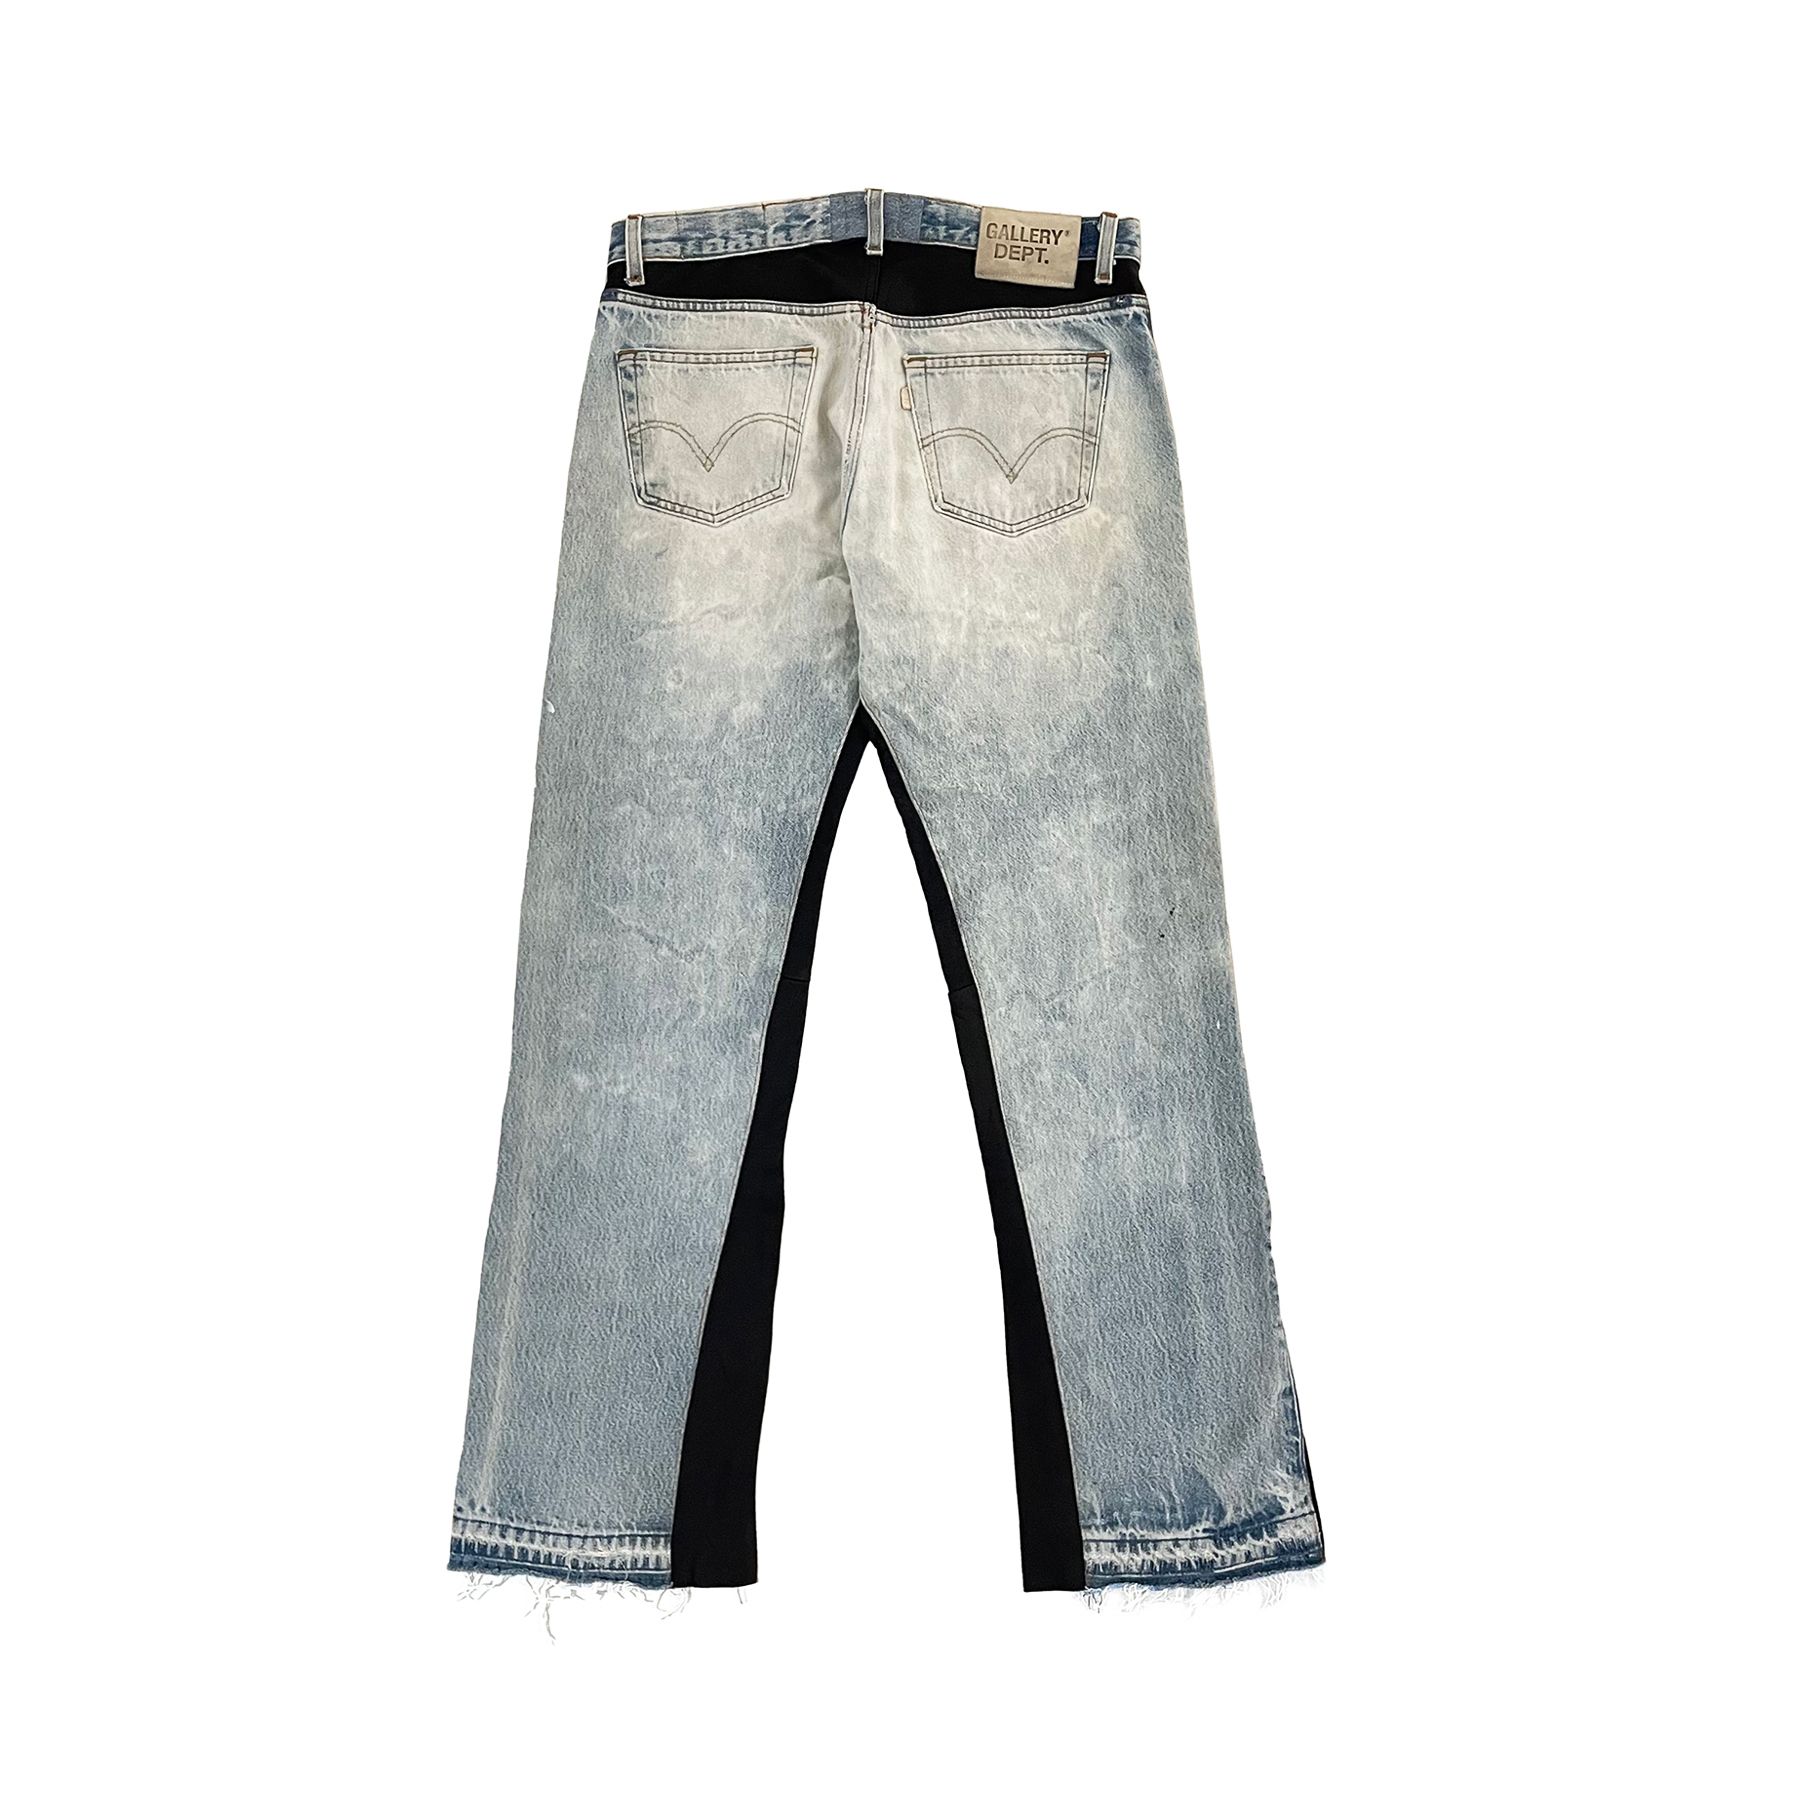 Gallery Dept. Gallery Dept. Vintage Levis 501 Leather Side Jeans Size US 34 / EU 50 - 2 Preview